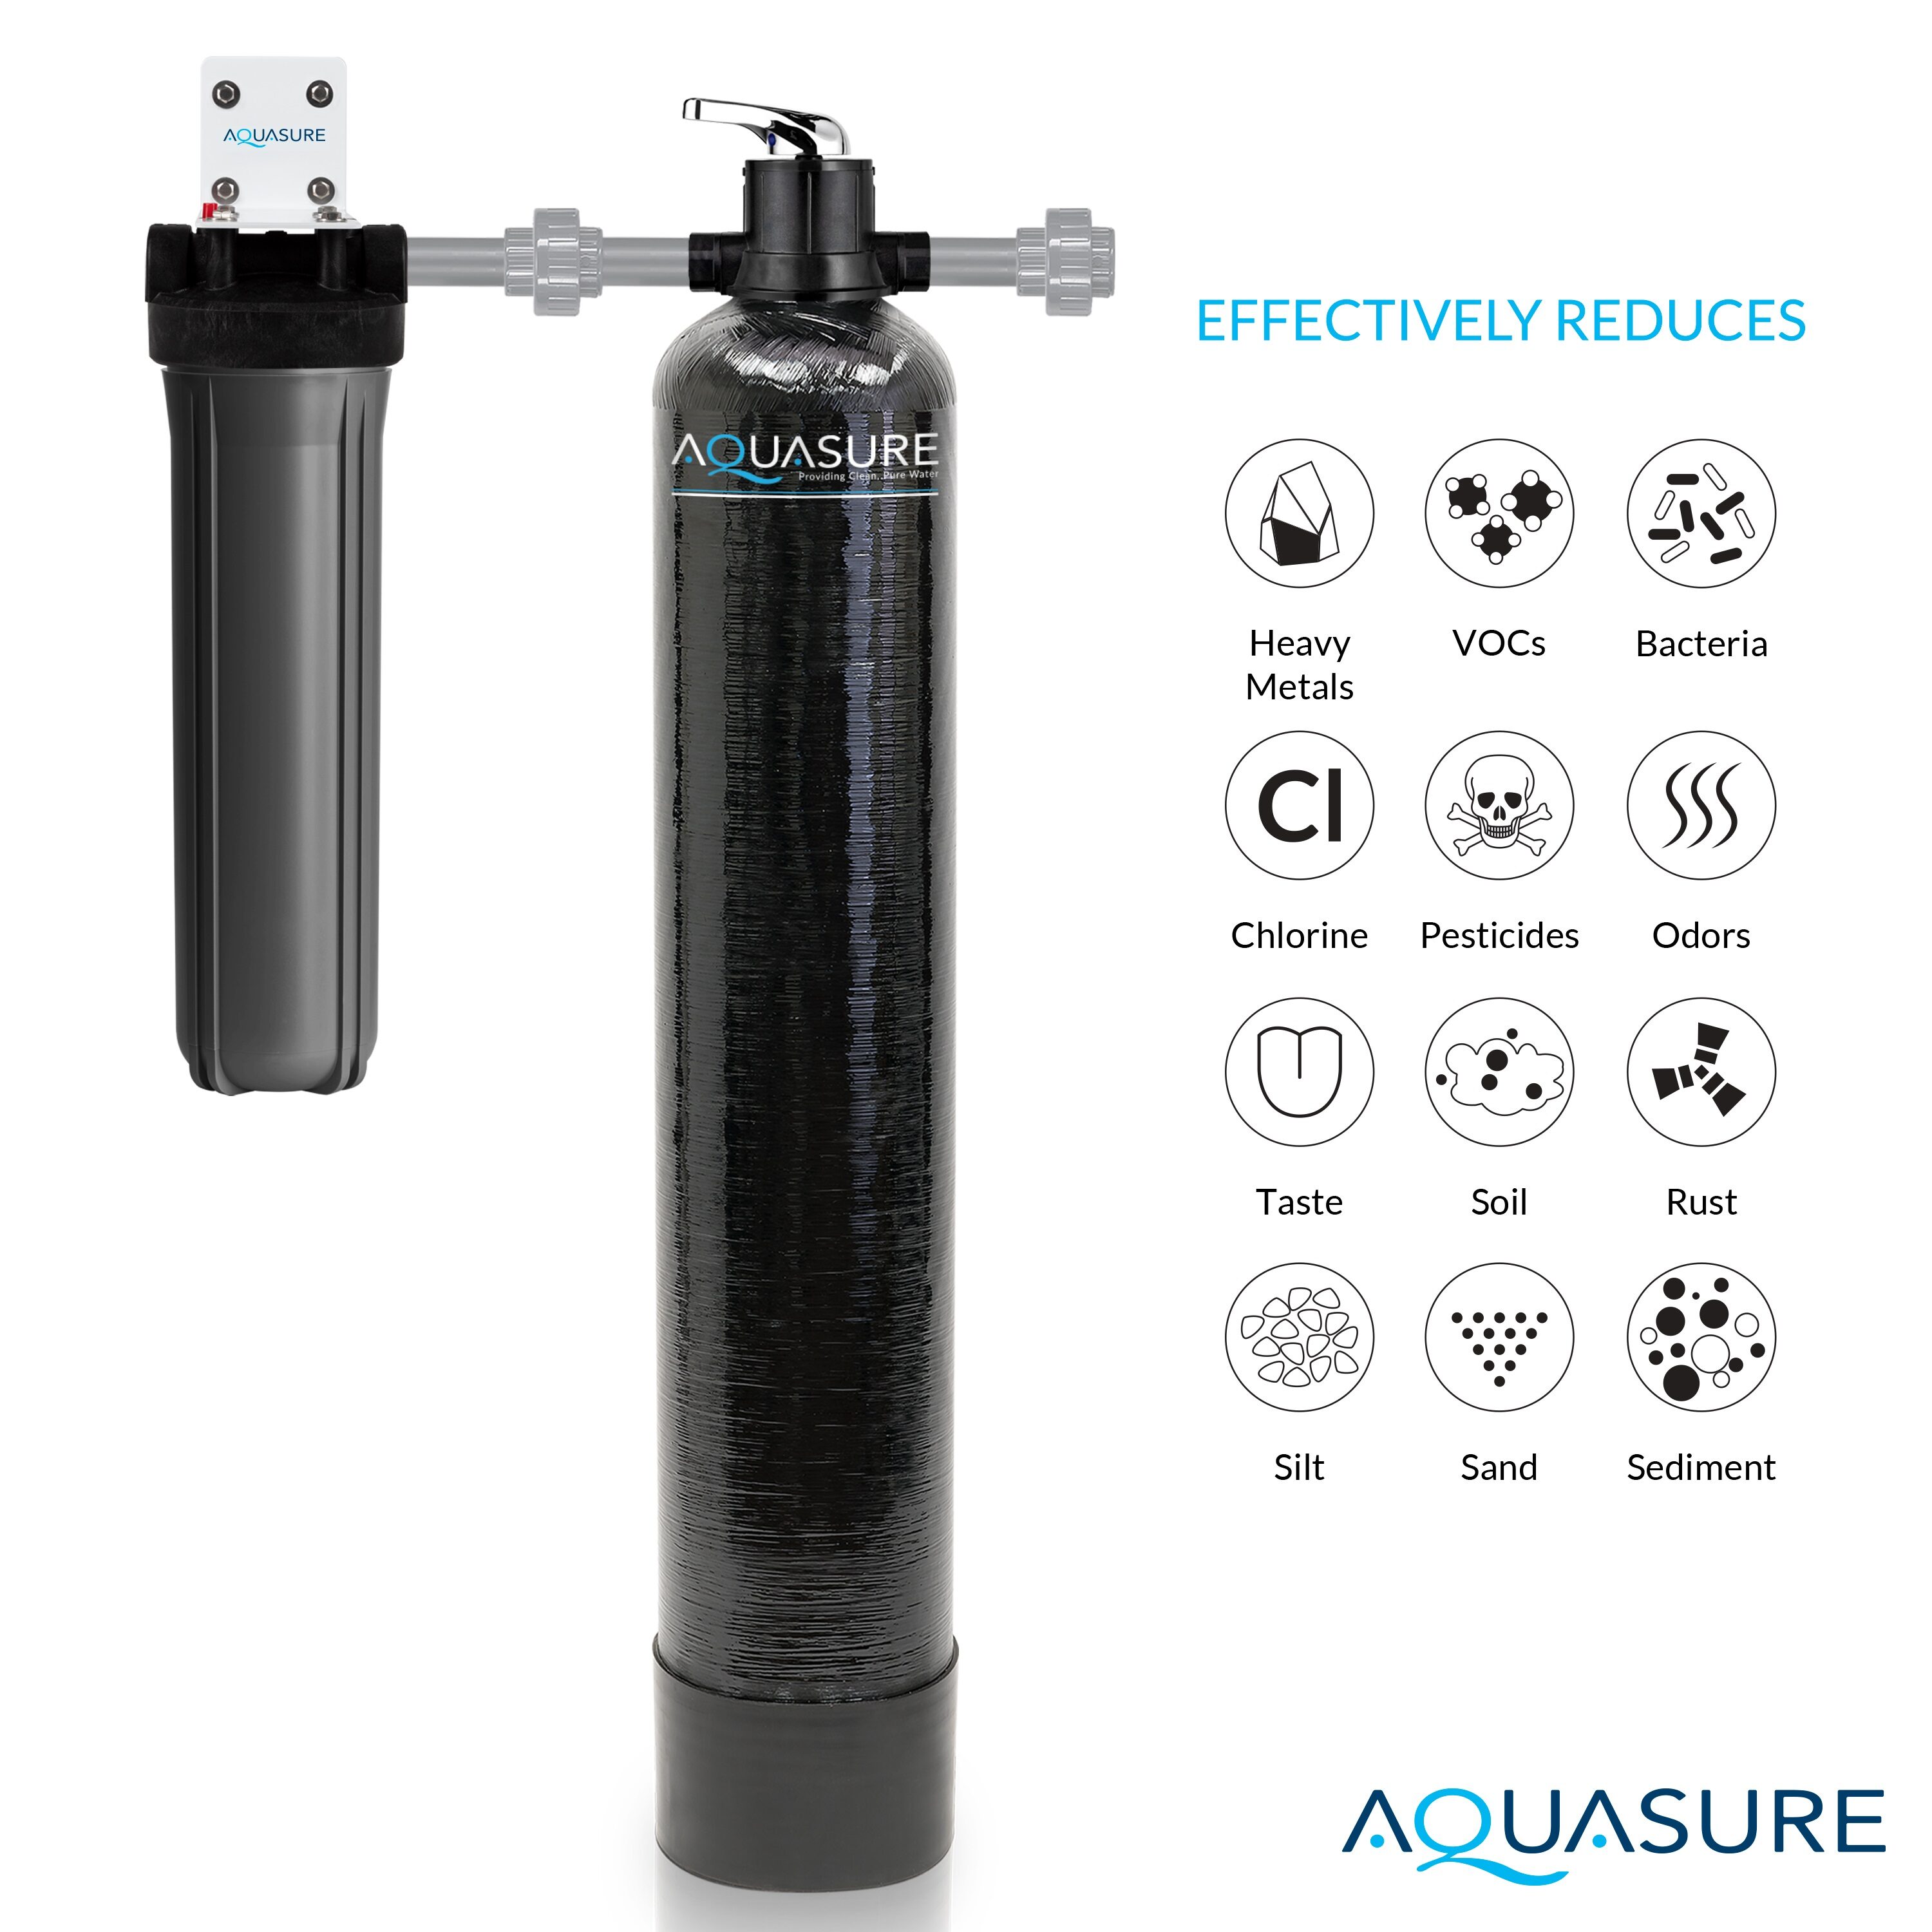 P-zone Aquagem Gravity Based Water Purifier